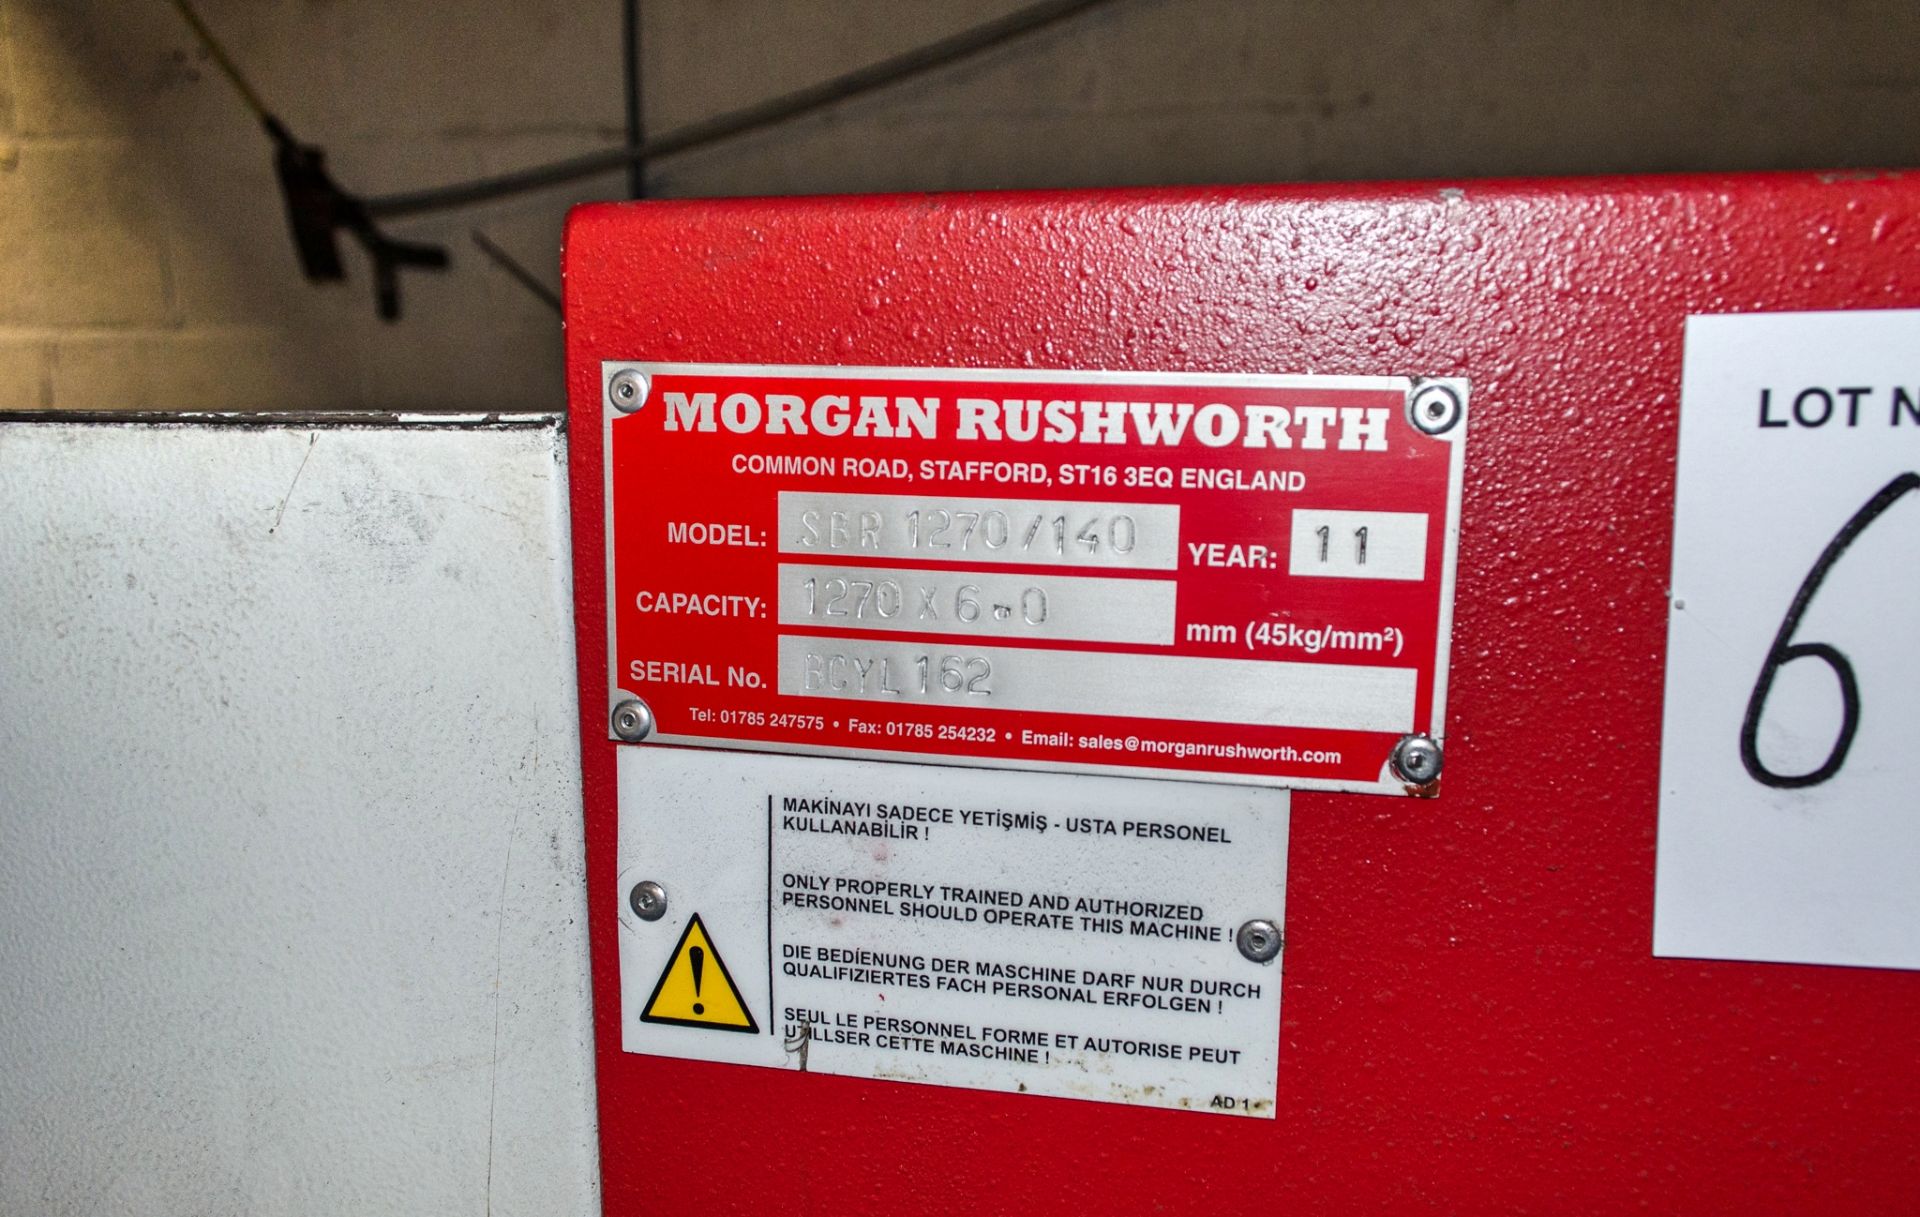 Morgan Rushworth SBR1270/140 powered rolls 1270 max 6mm capacity Year: 2011 S/N: BCYL162 c/w control - Image 5 of 5